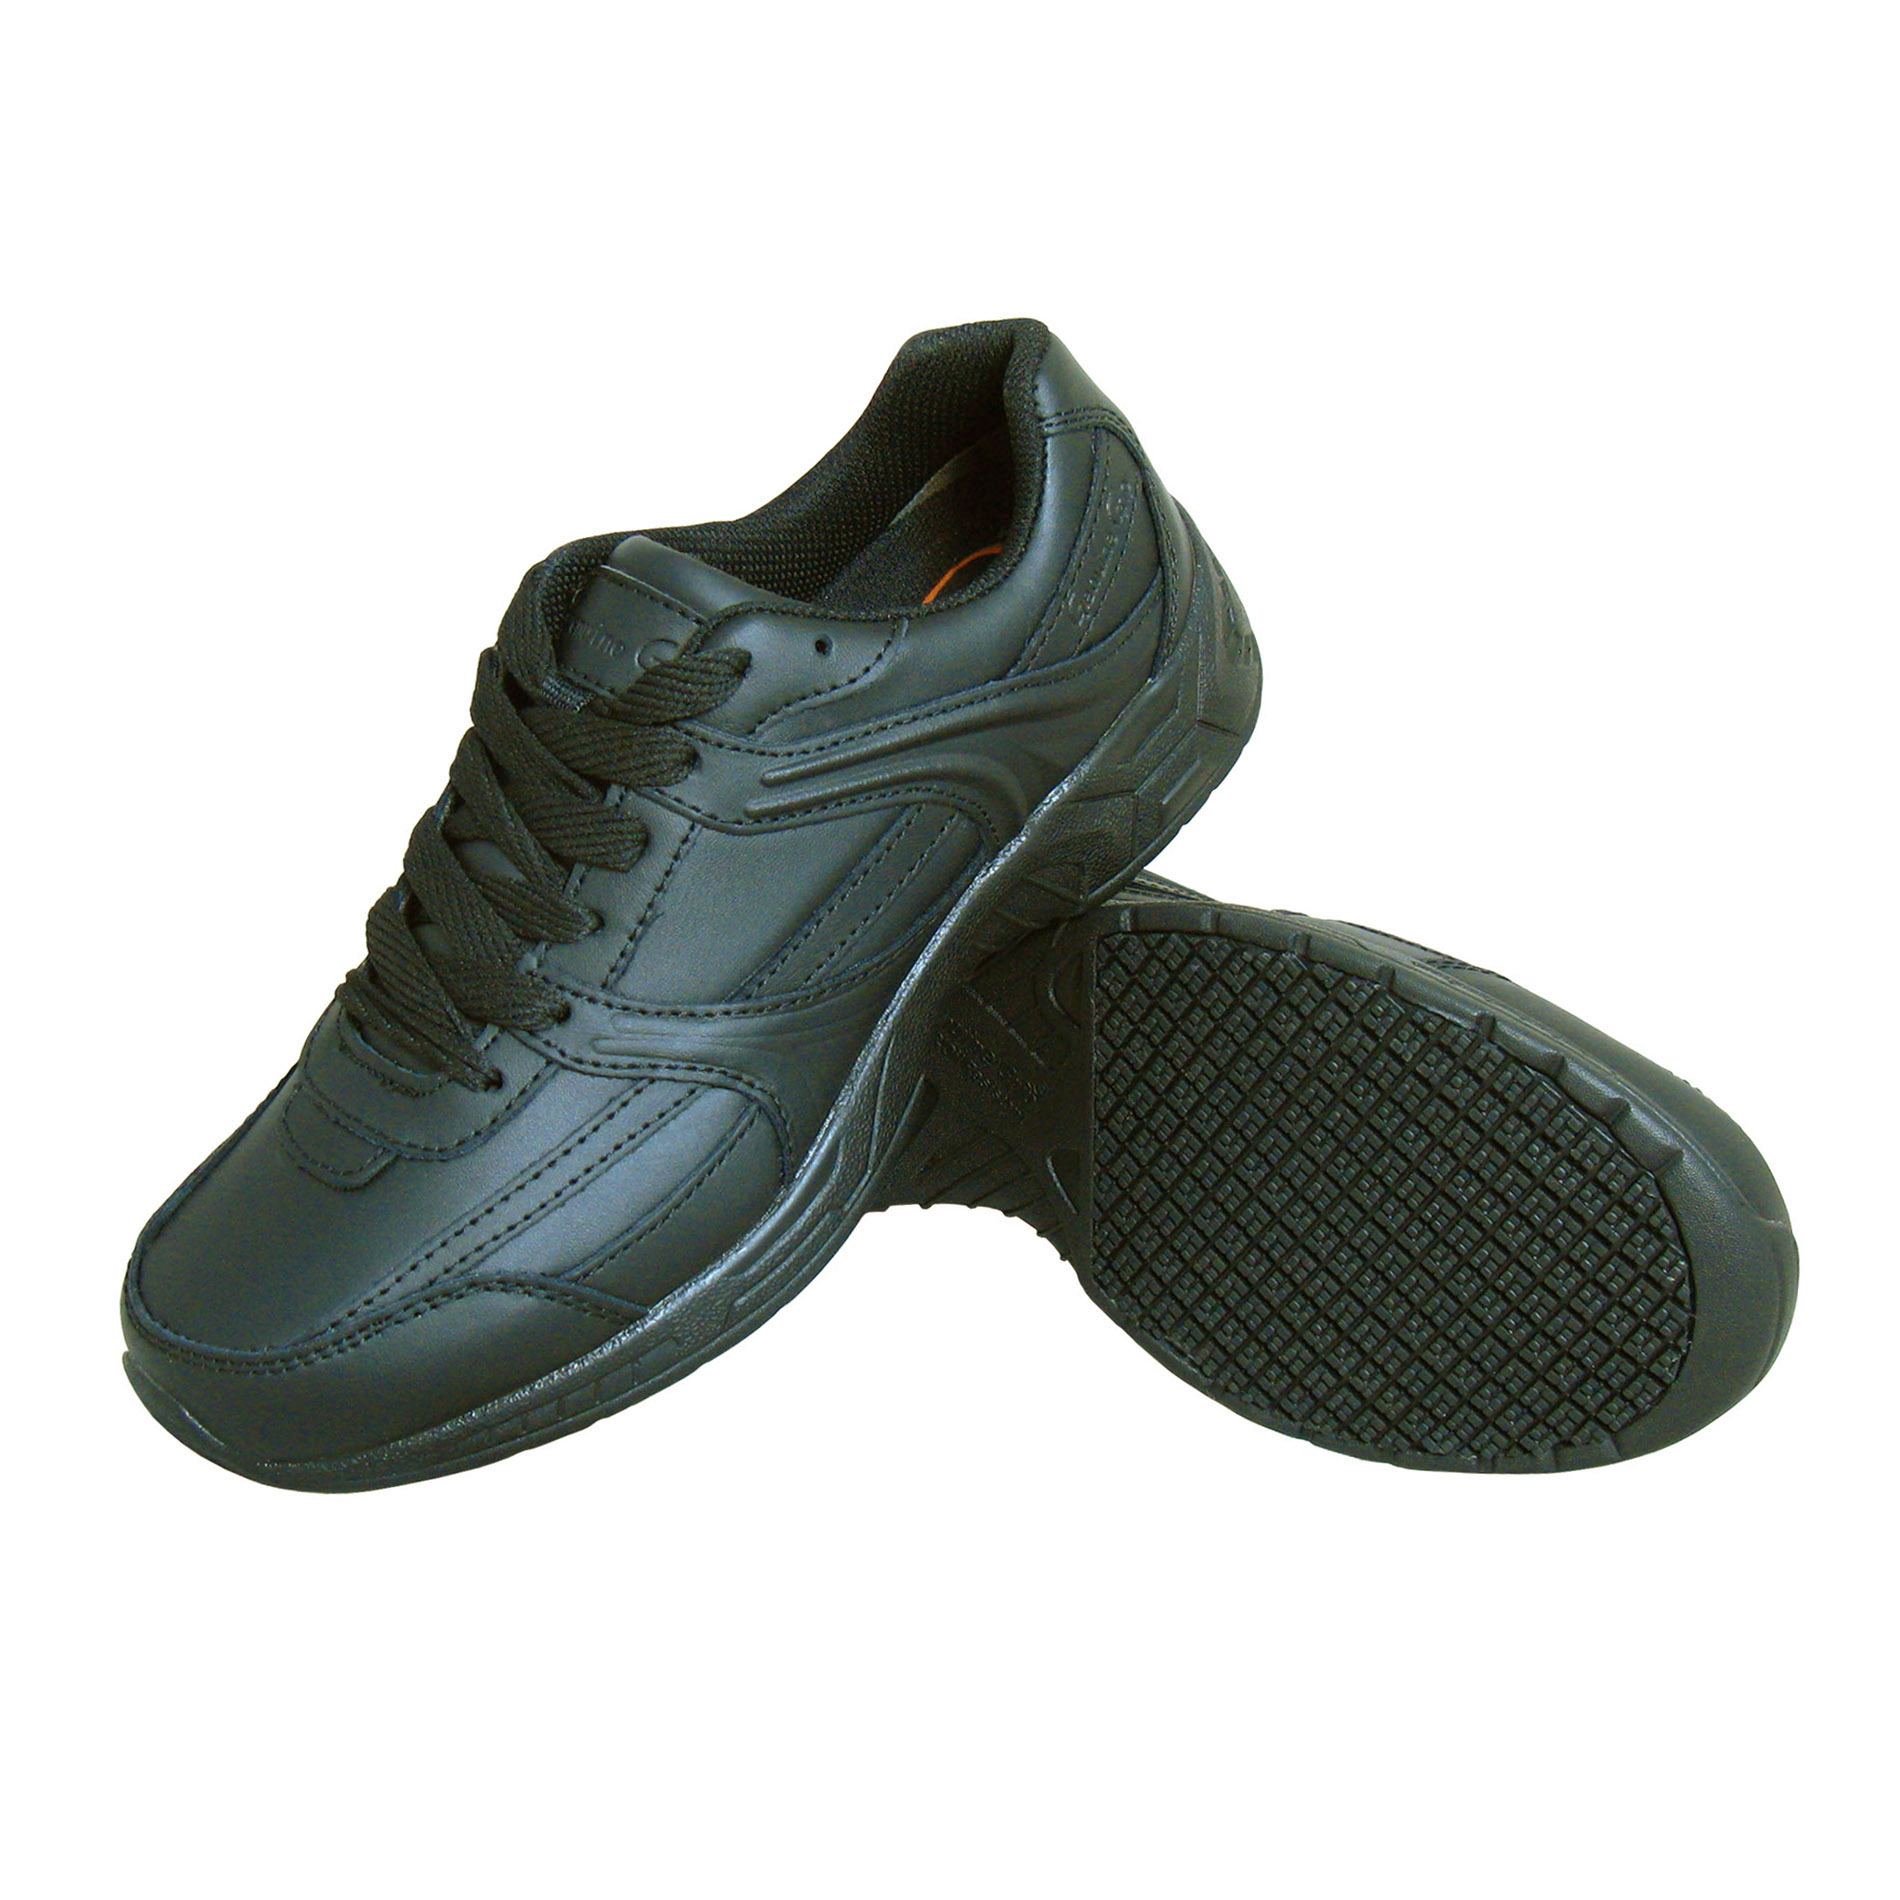 Genuine Grip Women's #1110 Slip-Resistant Leather Work Shoe - Black Wide Width Avail